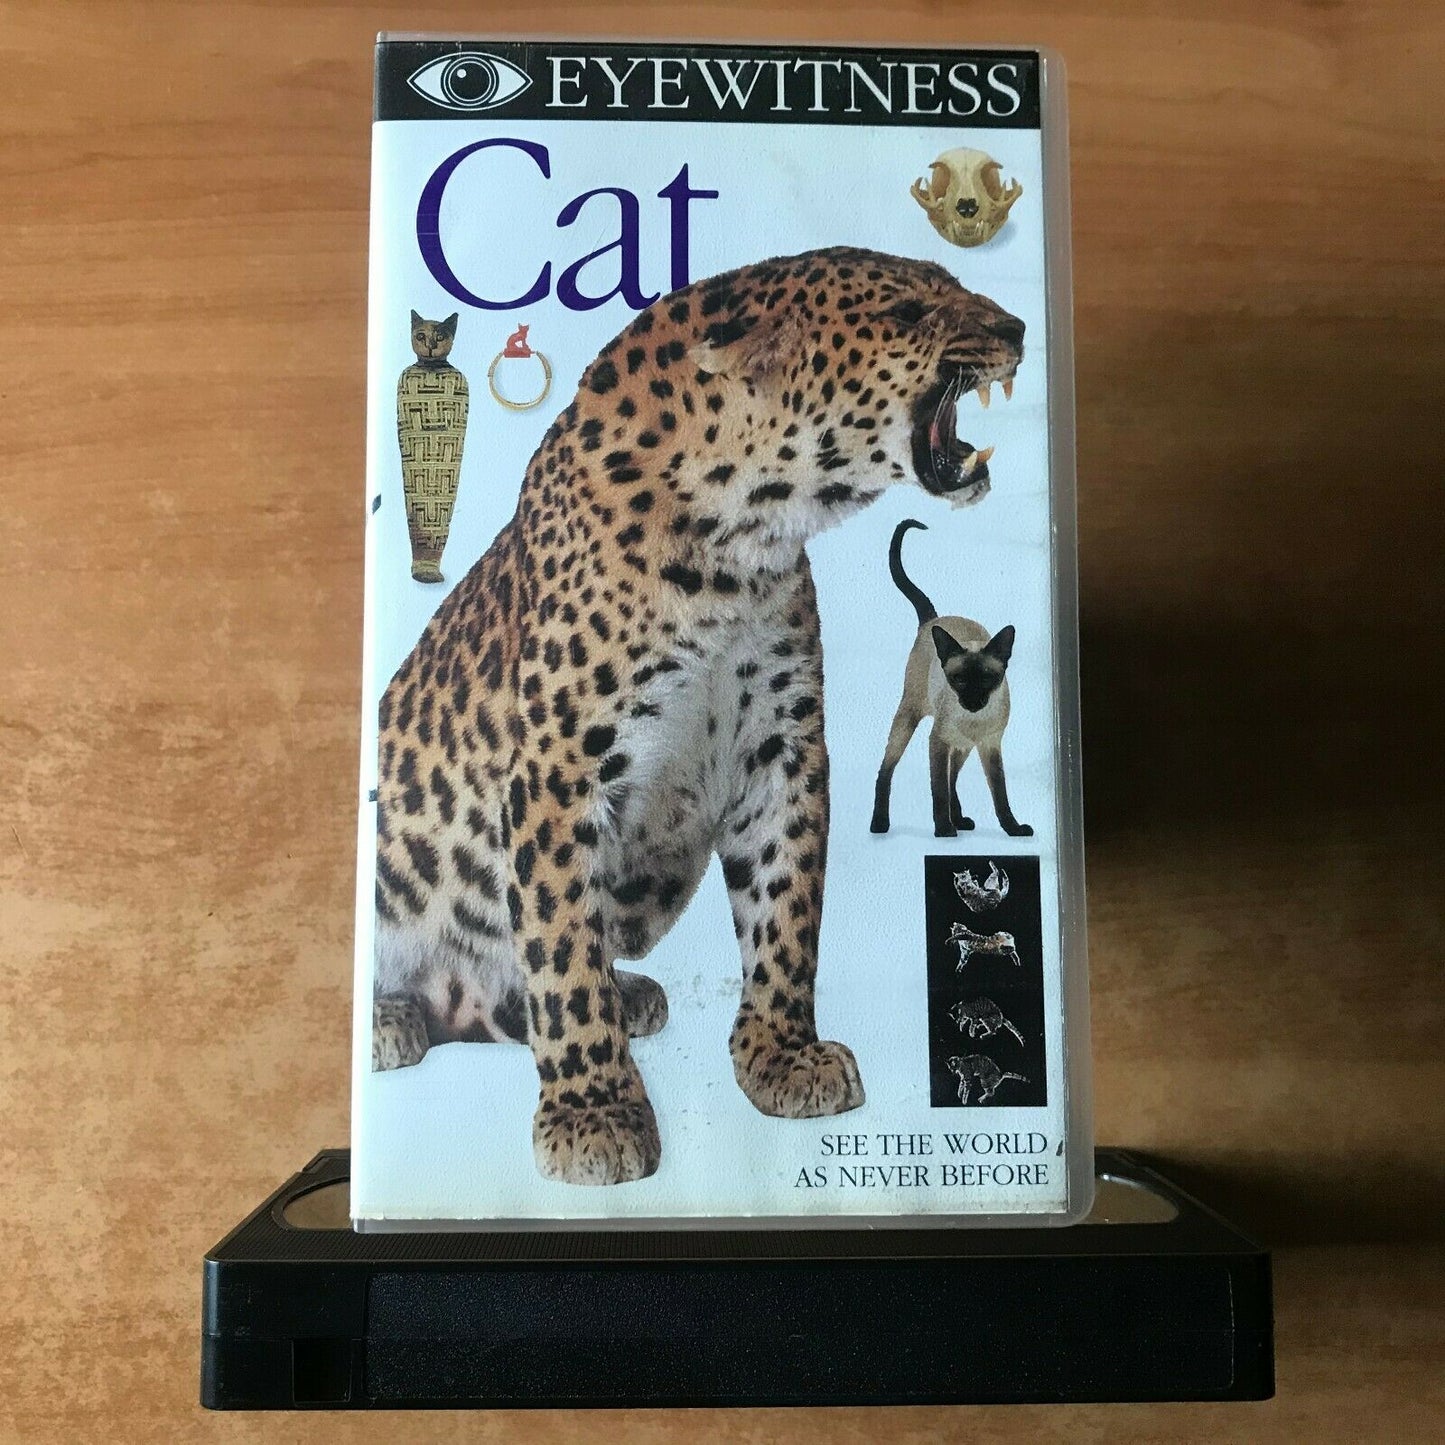 Eyewitness: Cat; [Gavin Maxwell] Documentary - Natural History - Cheetah - VHS-